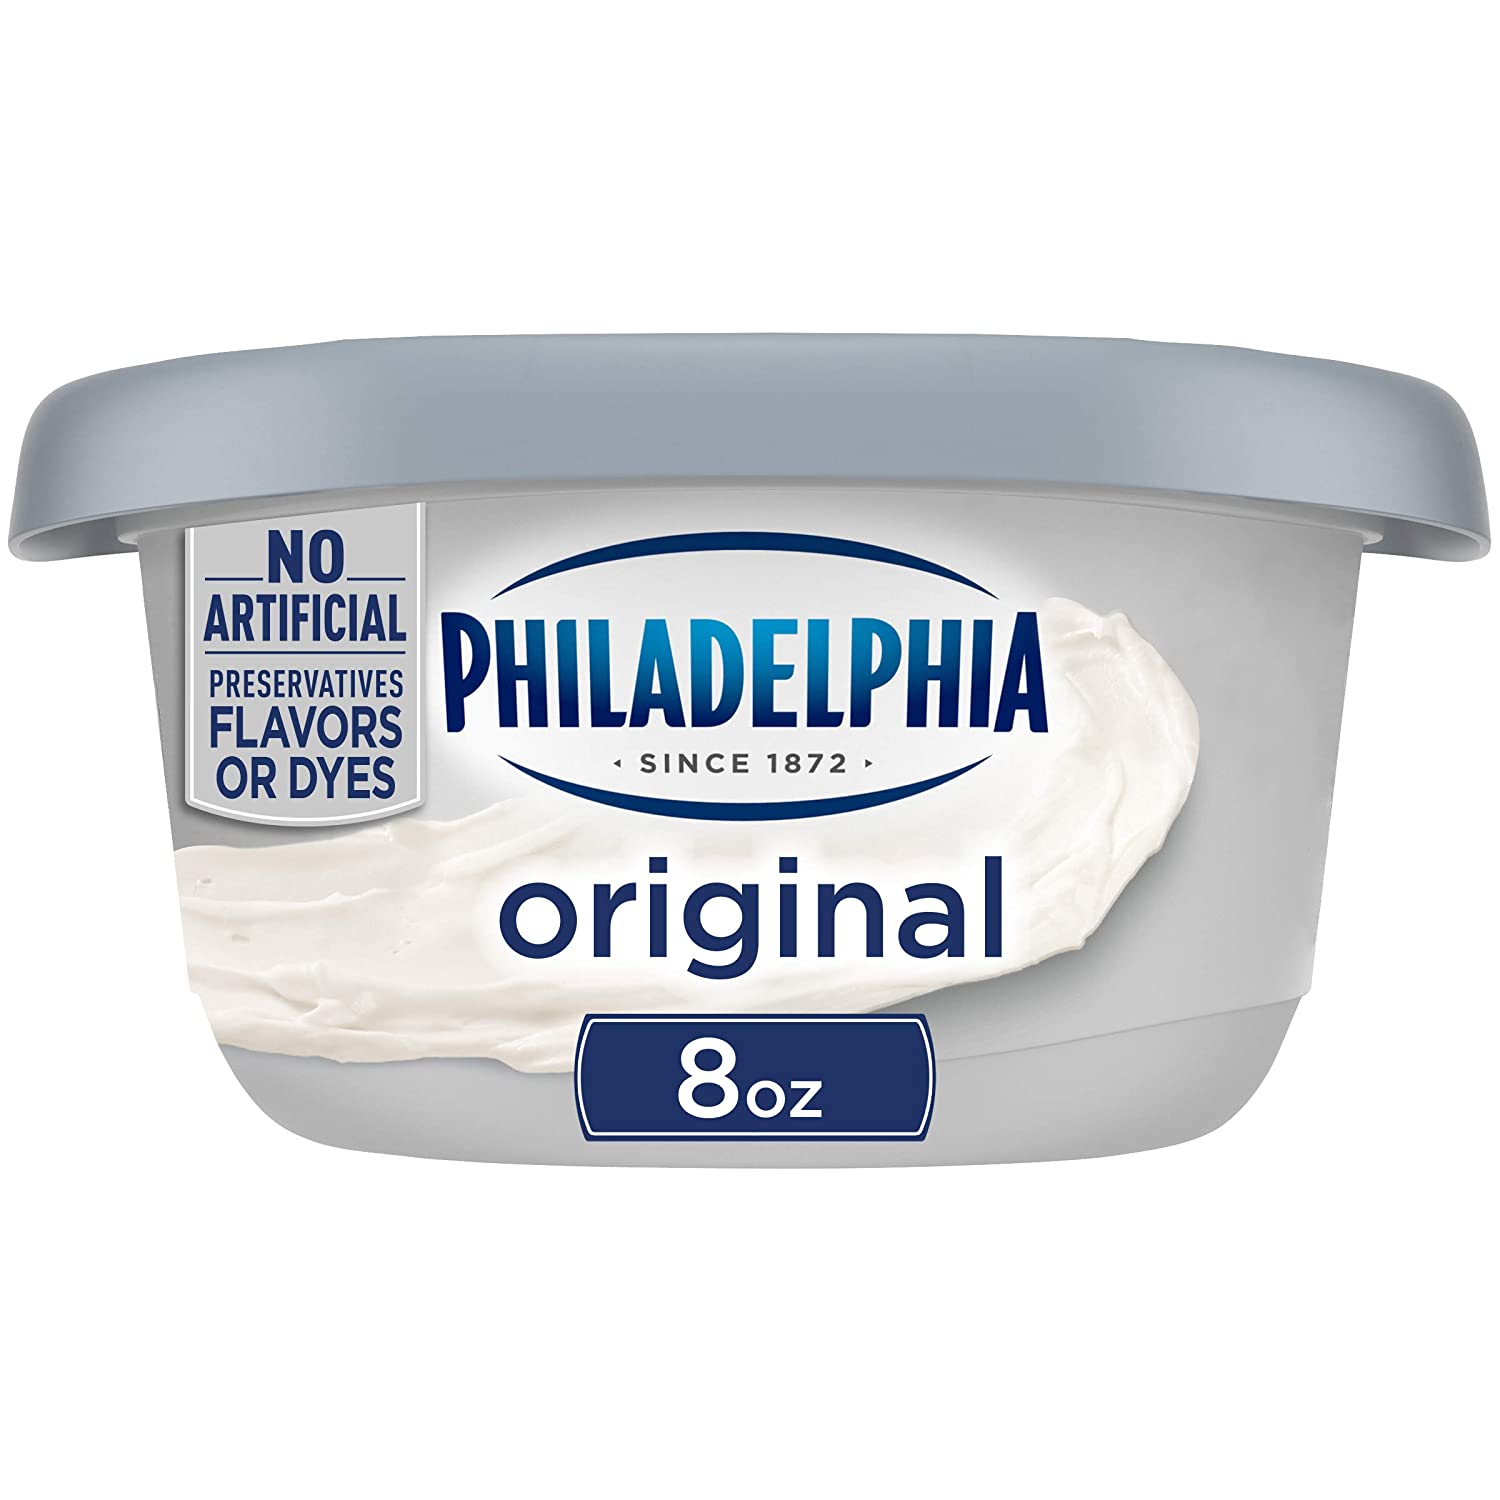 Phildelphia cream cheese interracial commerical